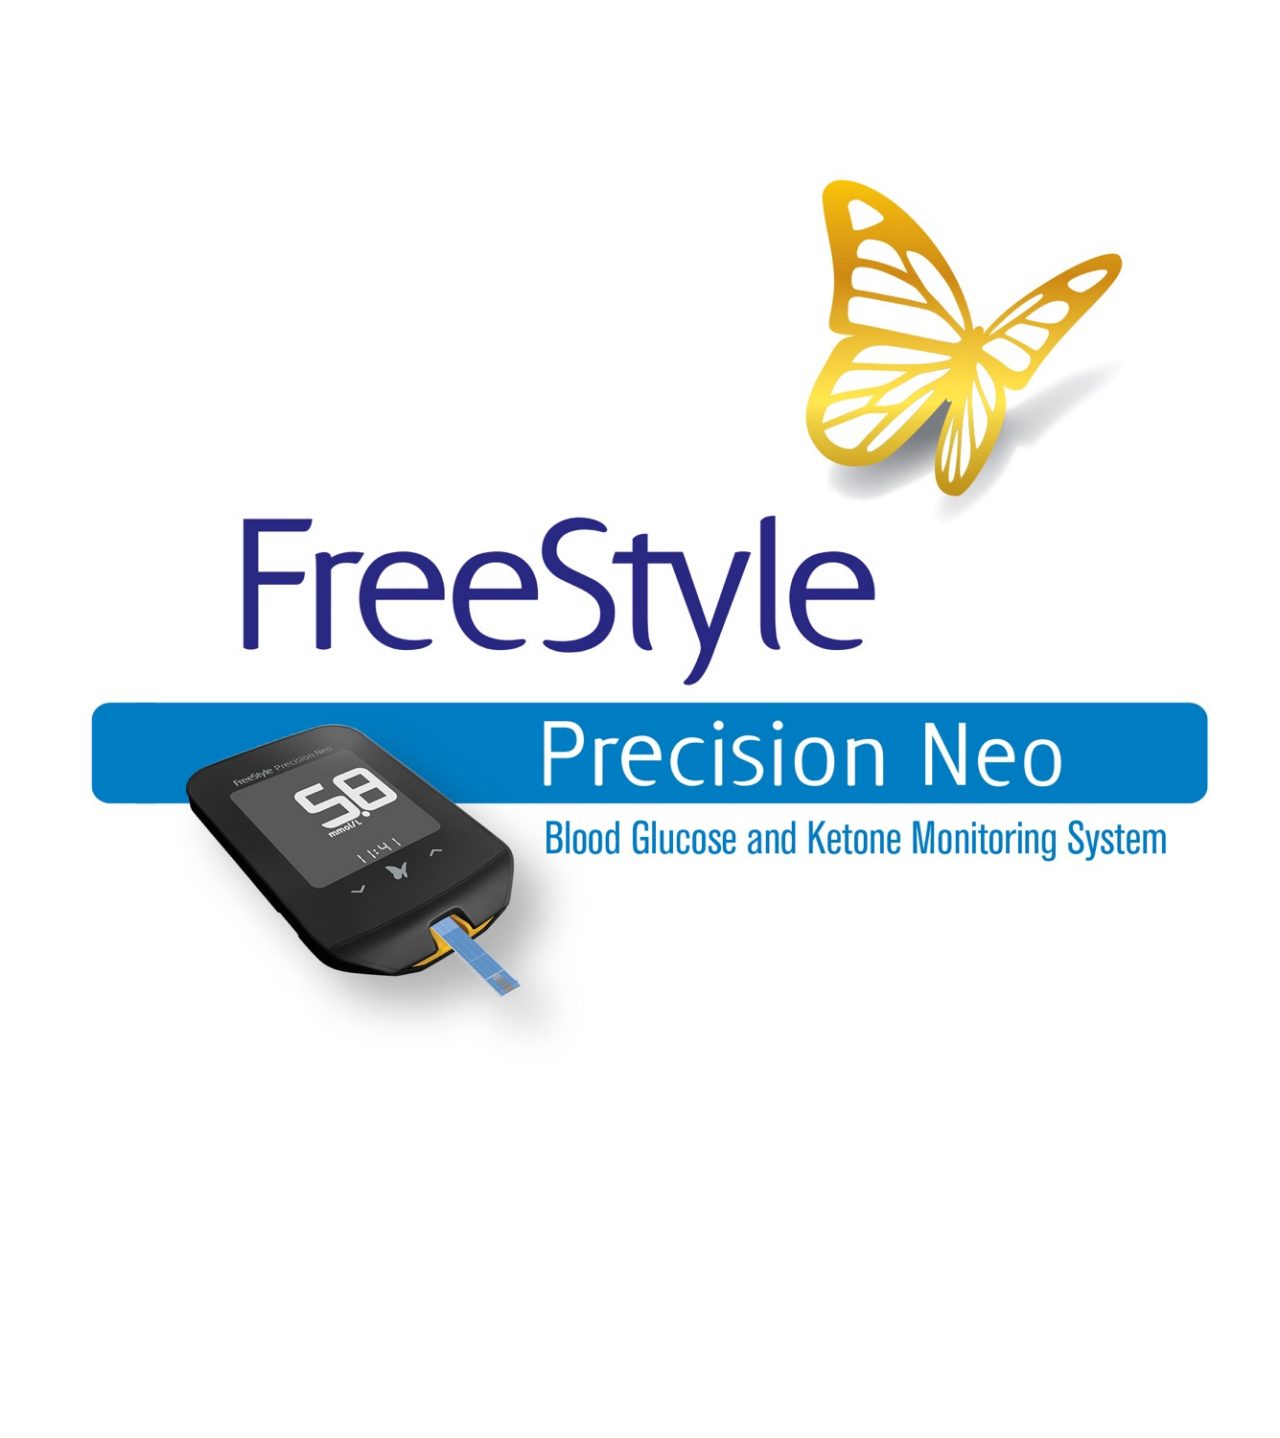 Abbott Freestyle Precision Blood Glucose Test Strips 50 Pieces 